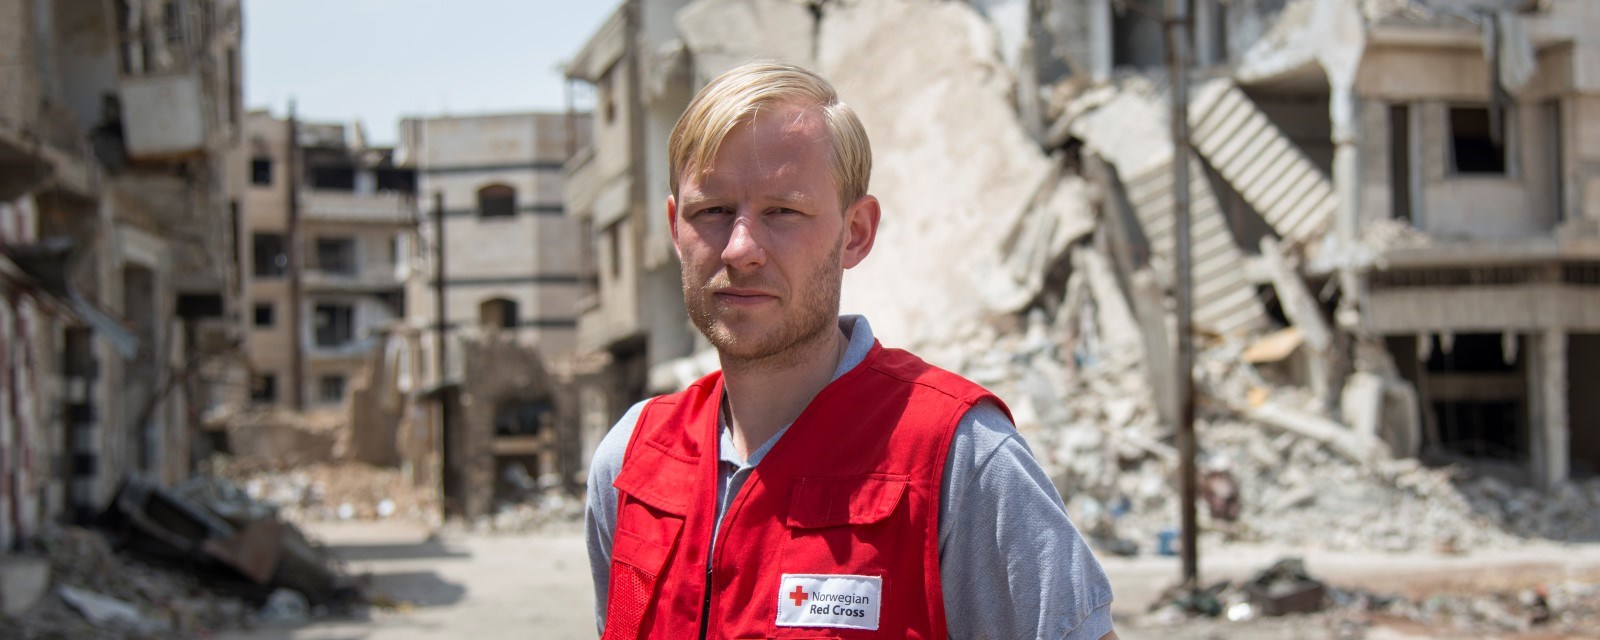 Ola Ulmo står blant ruiner og sønderbombede bygninger iført rød røde kors-vest